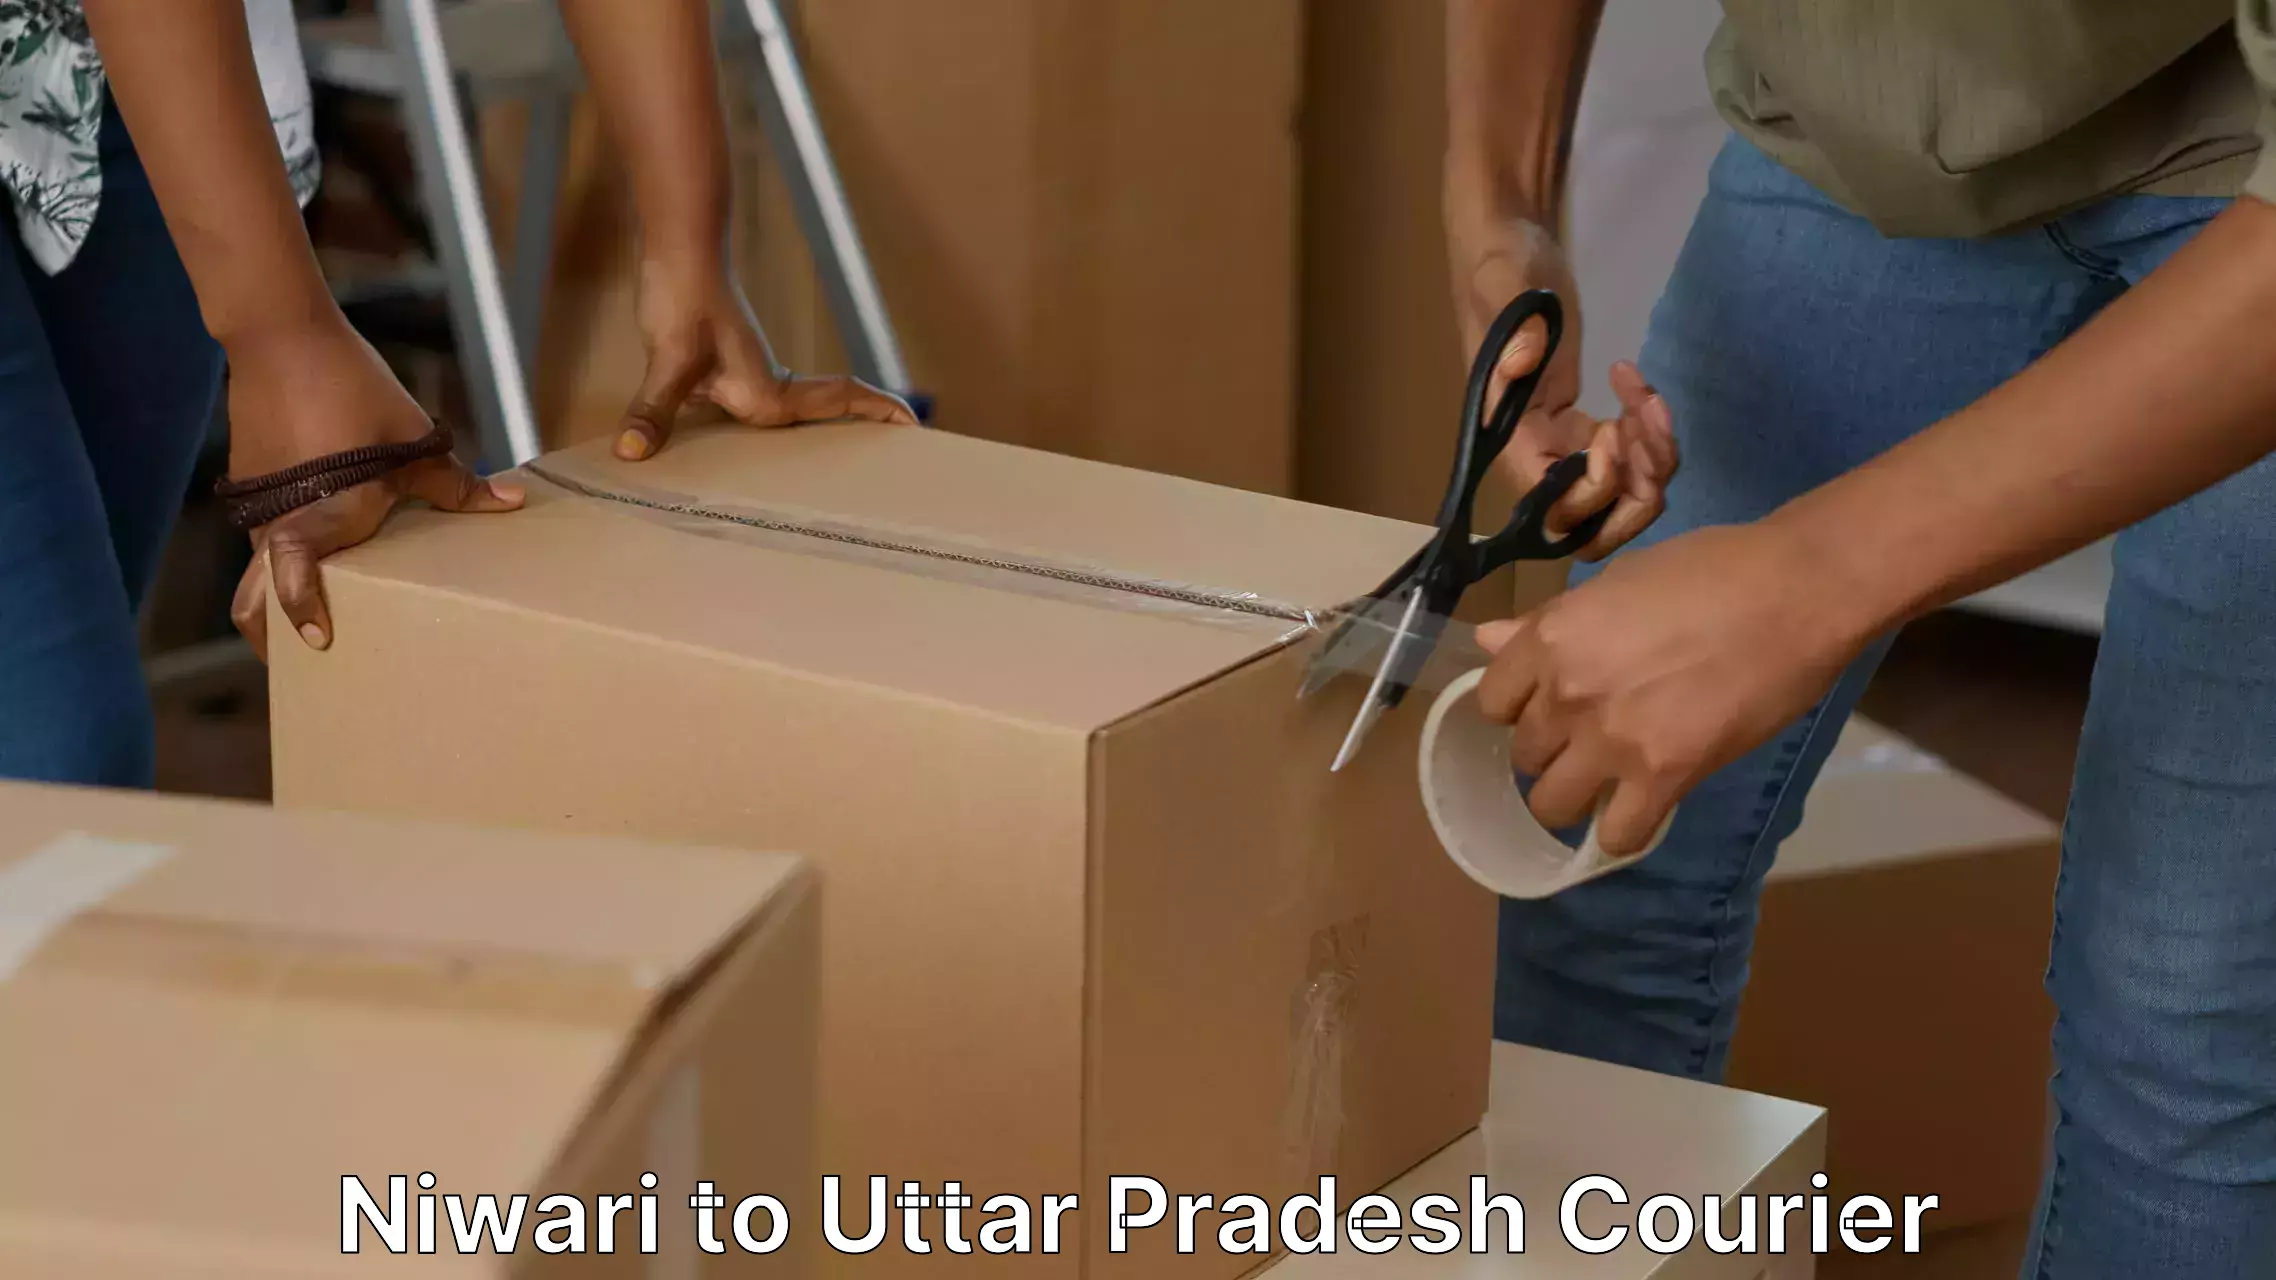 Trusted moving company Niwari to Uttar Pradesh